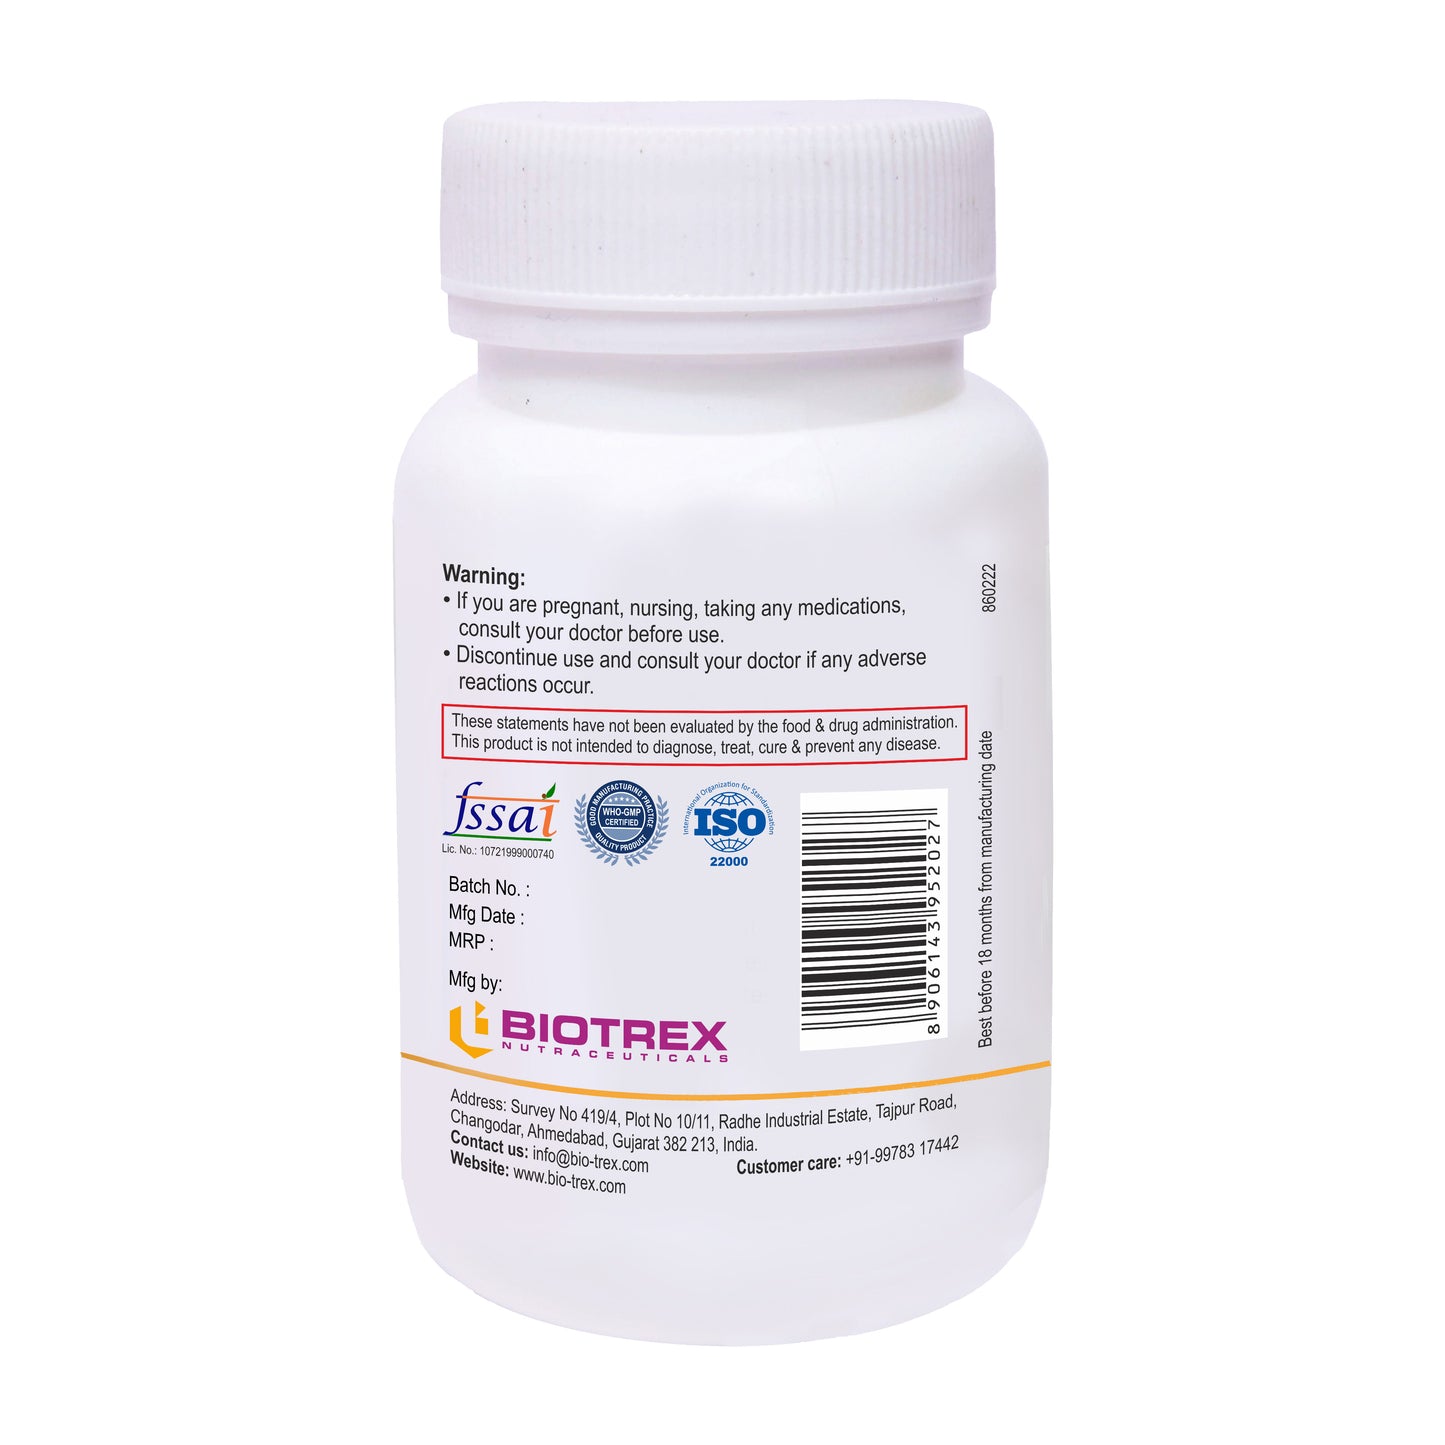 Biotrex Women's Multivitamin Daily - 60 Tablets